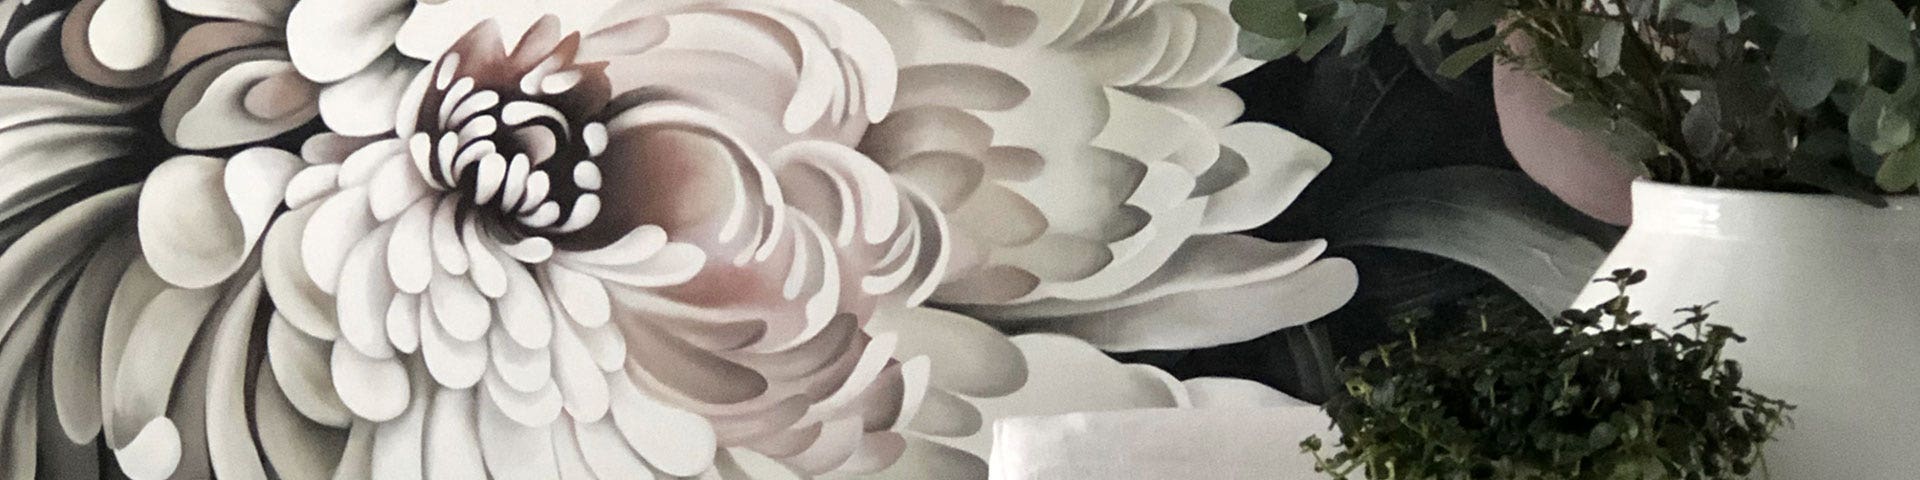 Sample - Custom - Still Life With Shadows - Twisting Tulips - Vinyl - White - Gray - Floral Wallpaper